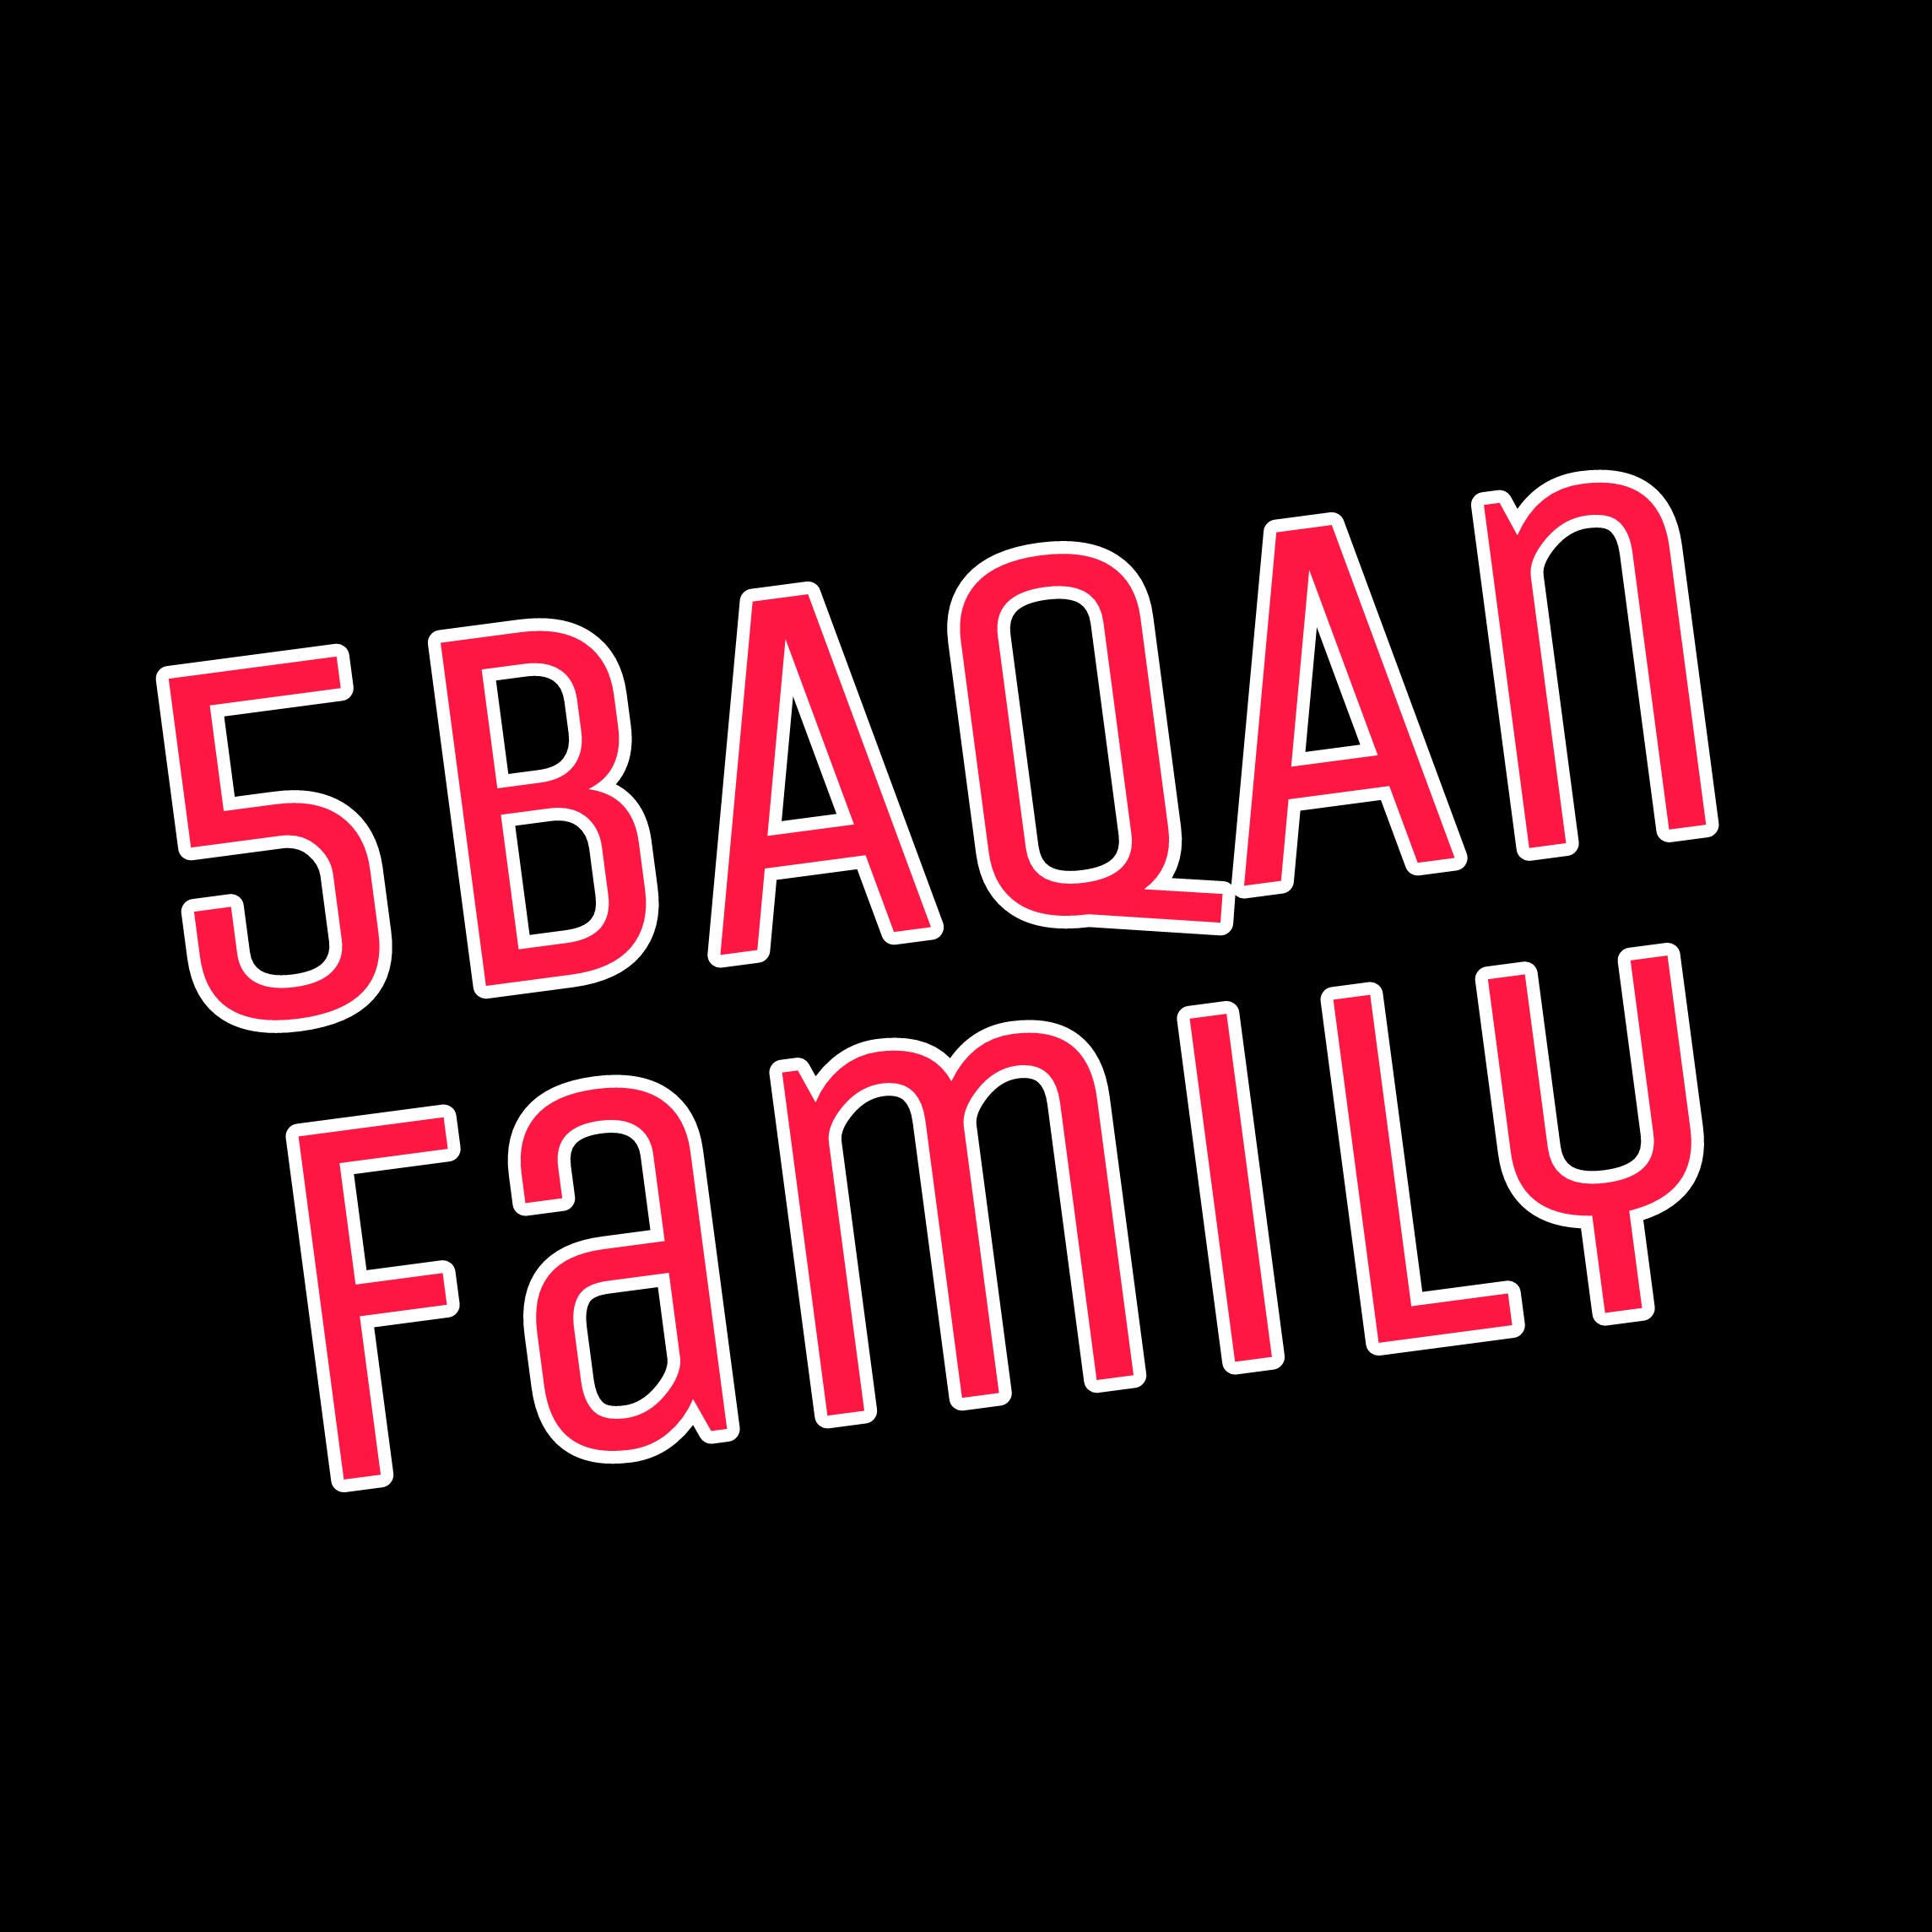 5baqan family